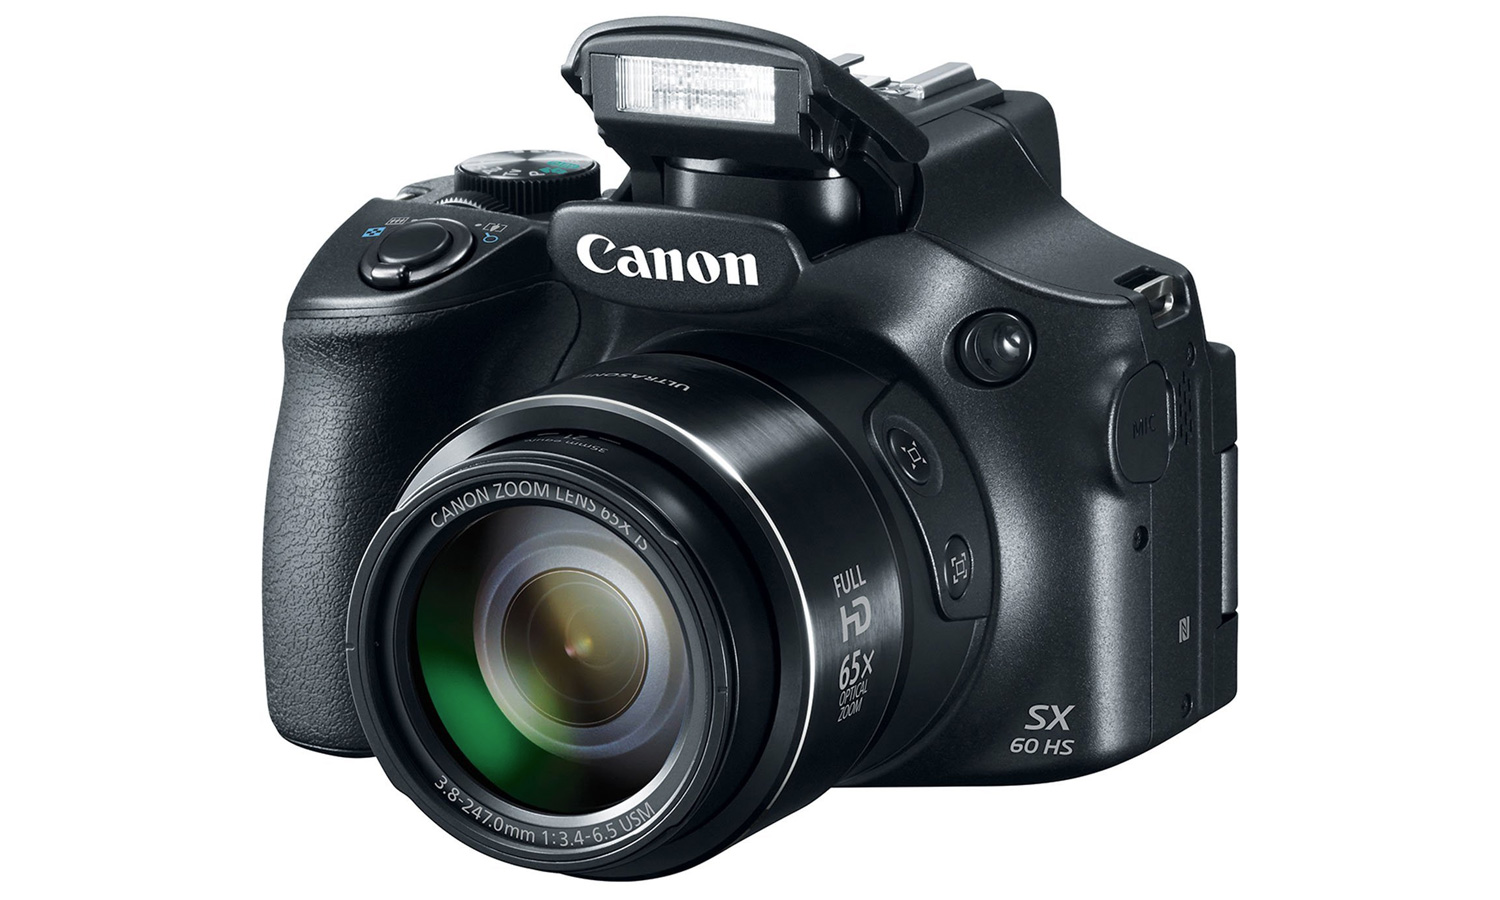 Canon PowerShot SX60 HS Review: One Amazing Ultrazoom | Sean Captain